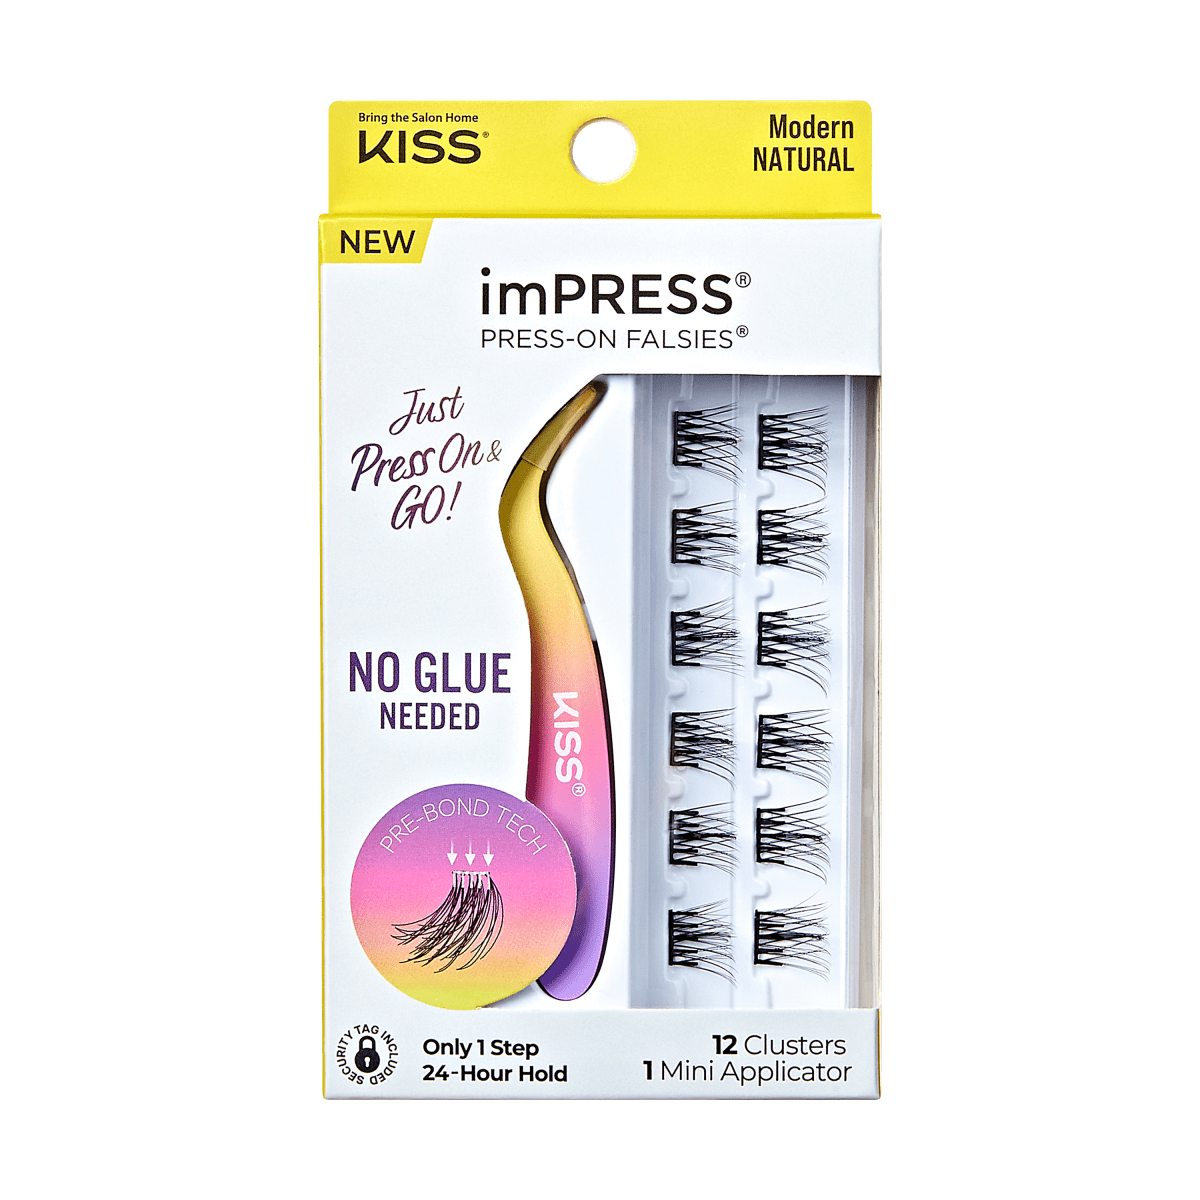 imPRESS Press-On Falsies Minipack, 12 Clusters + Applicator - Modern